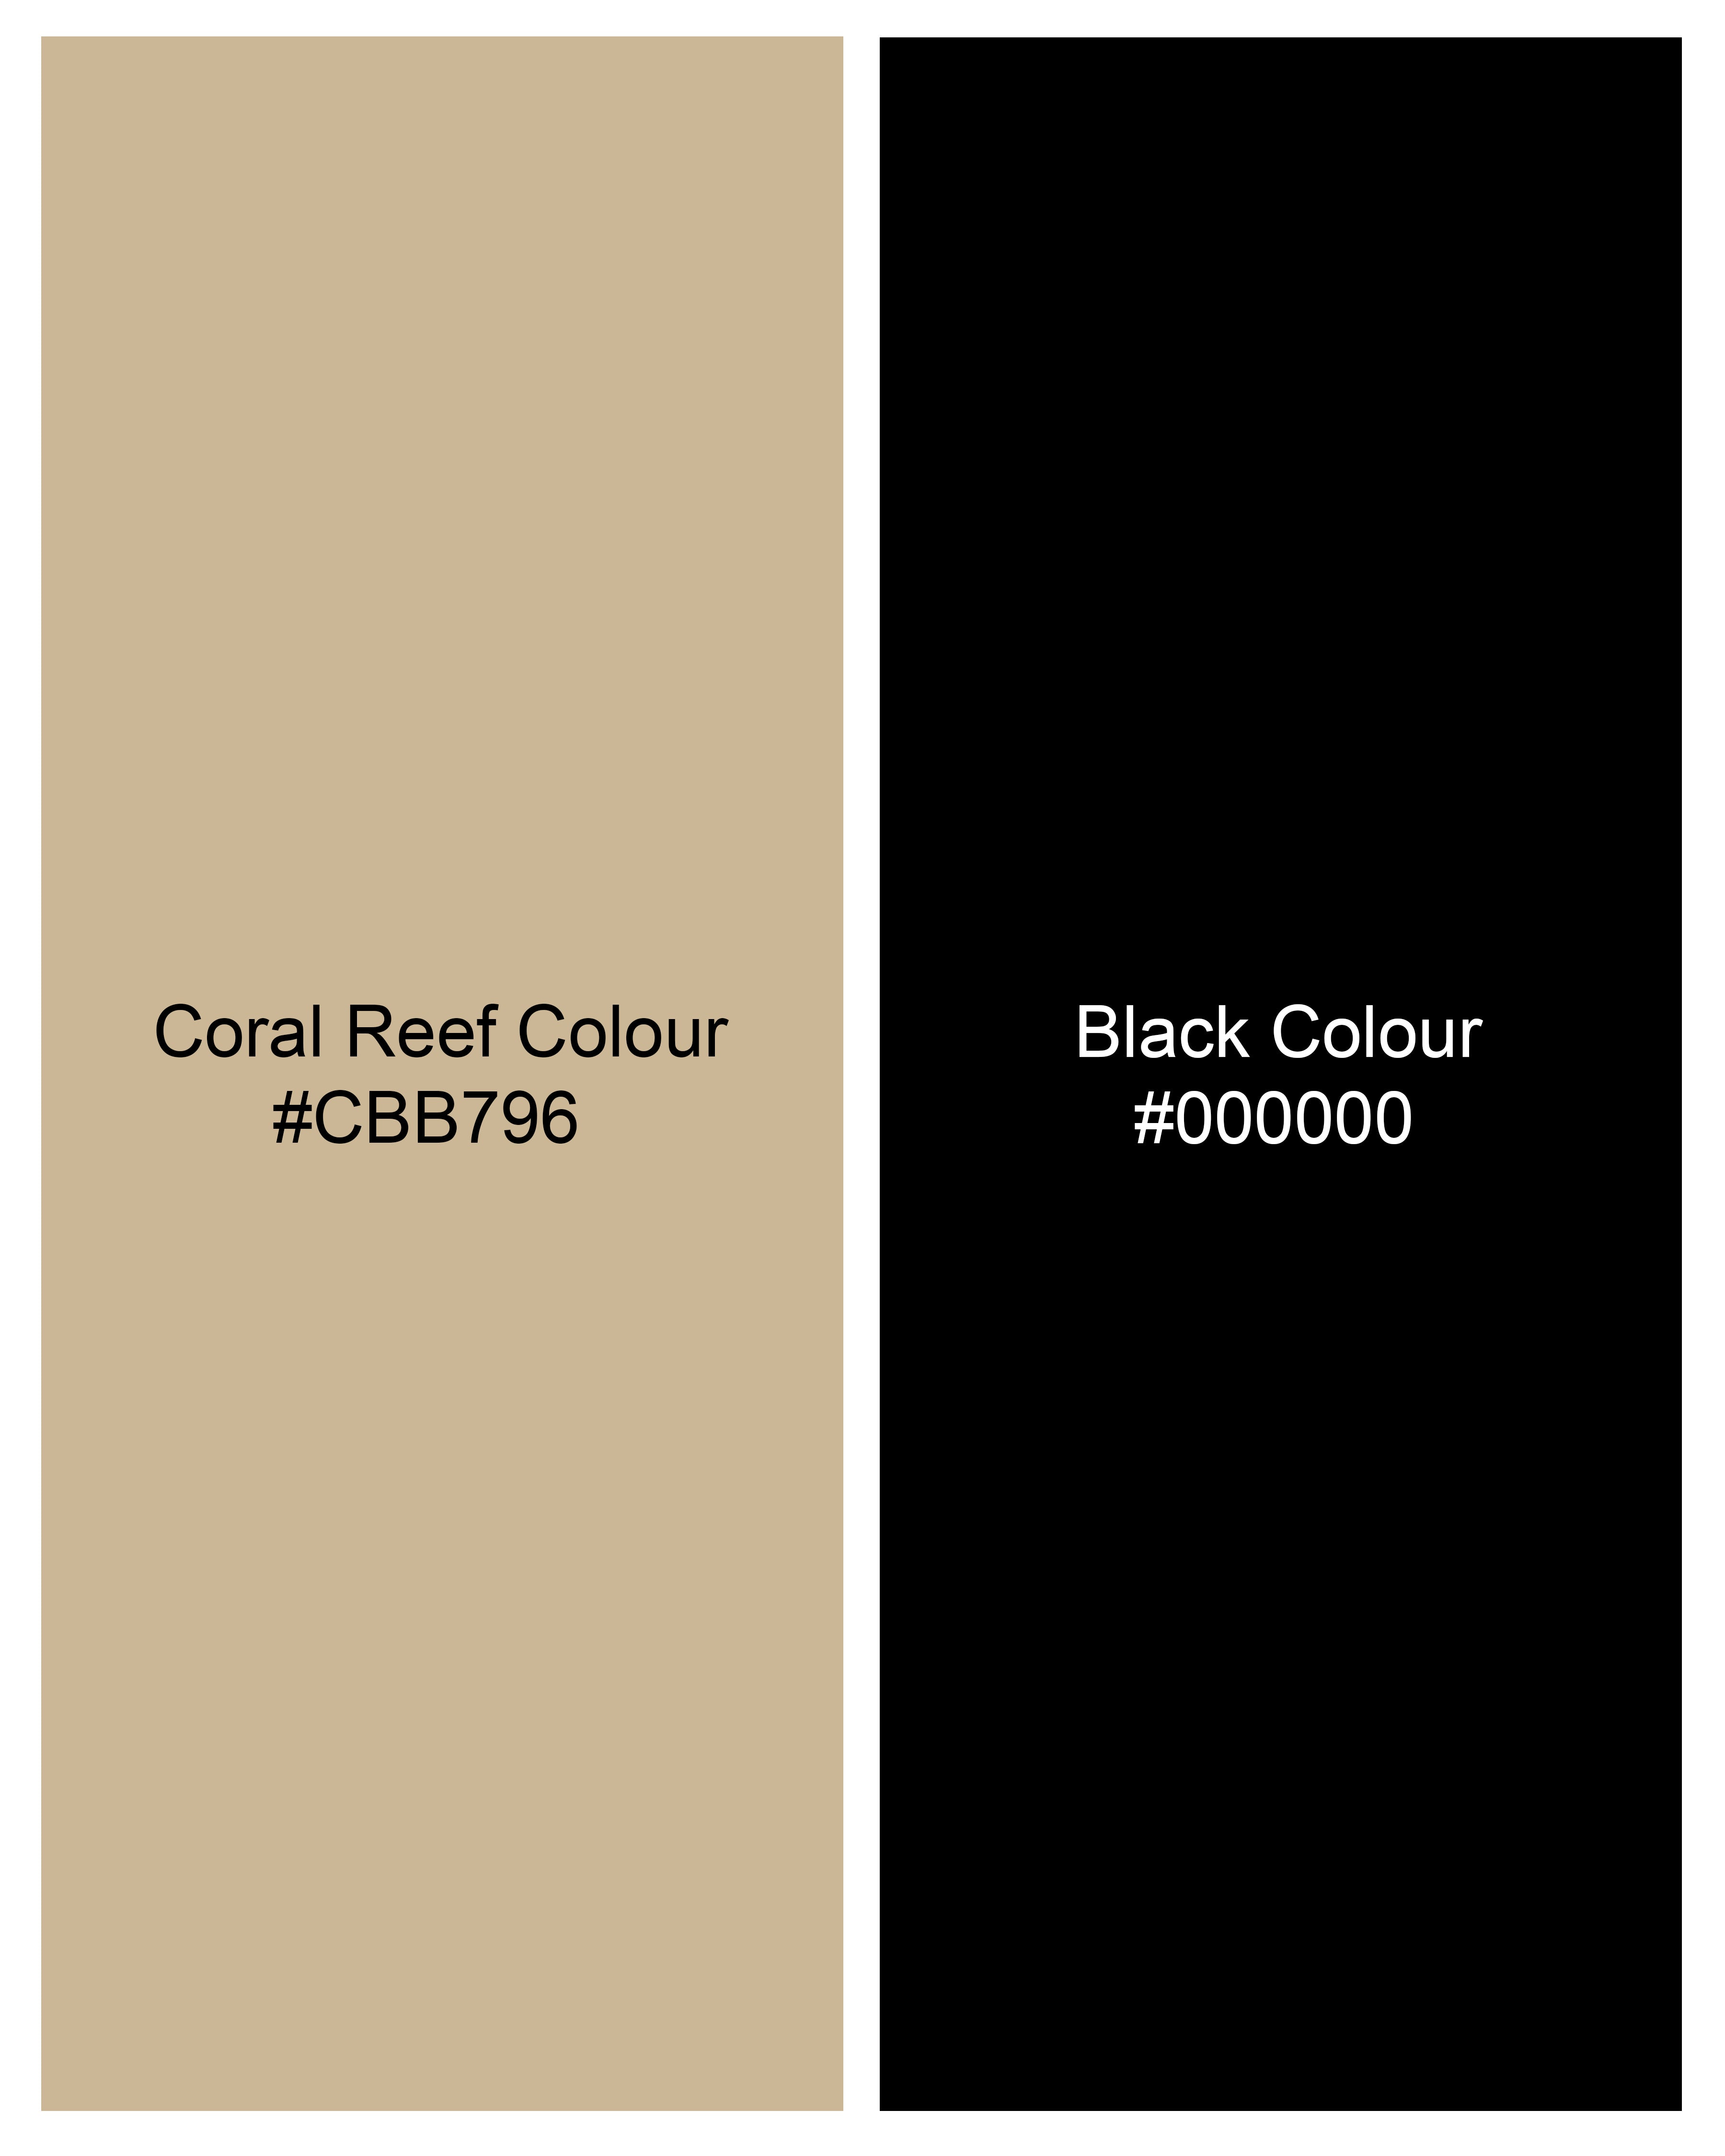 Coral Reef Brown with Black Dual Stripe Organic Cotton Pique Polo TS856-S, TS856-M, TS856-L, TS856-XL, TS856-XXL